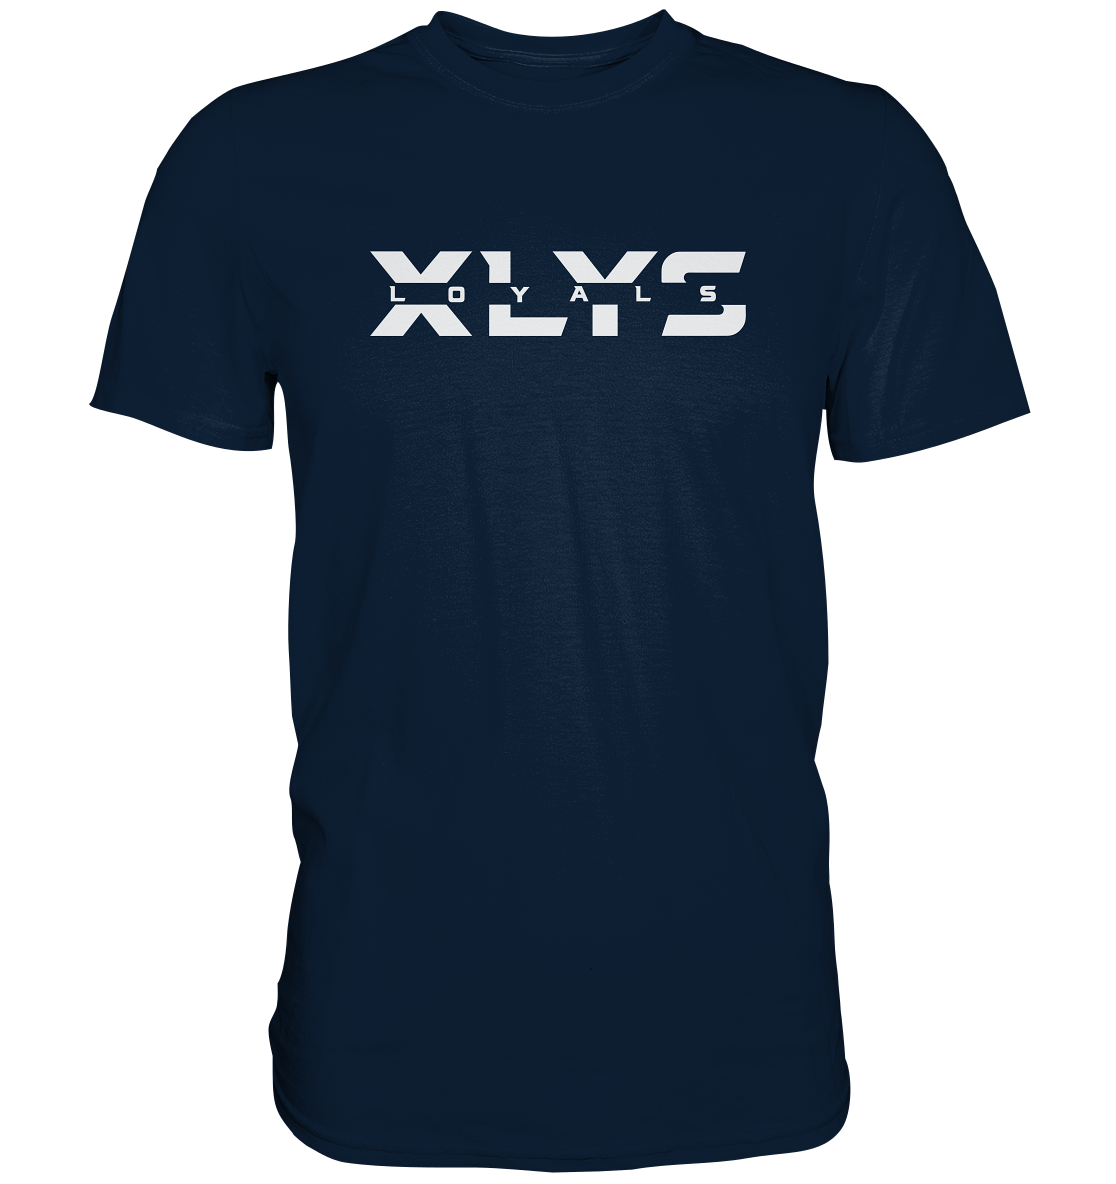 XLYS LOYALS - Basic Shirt